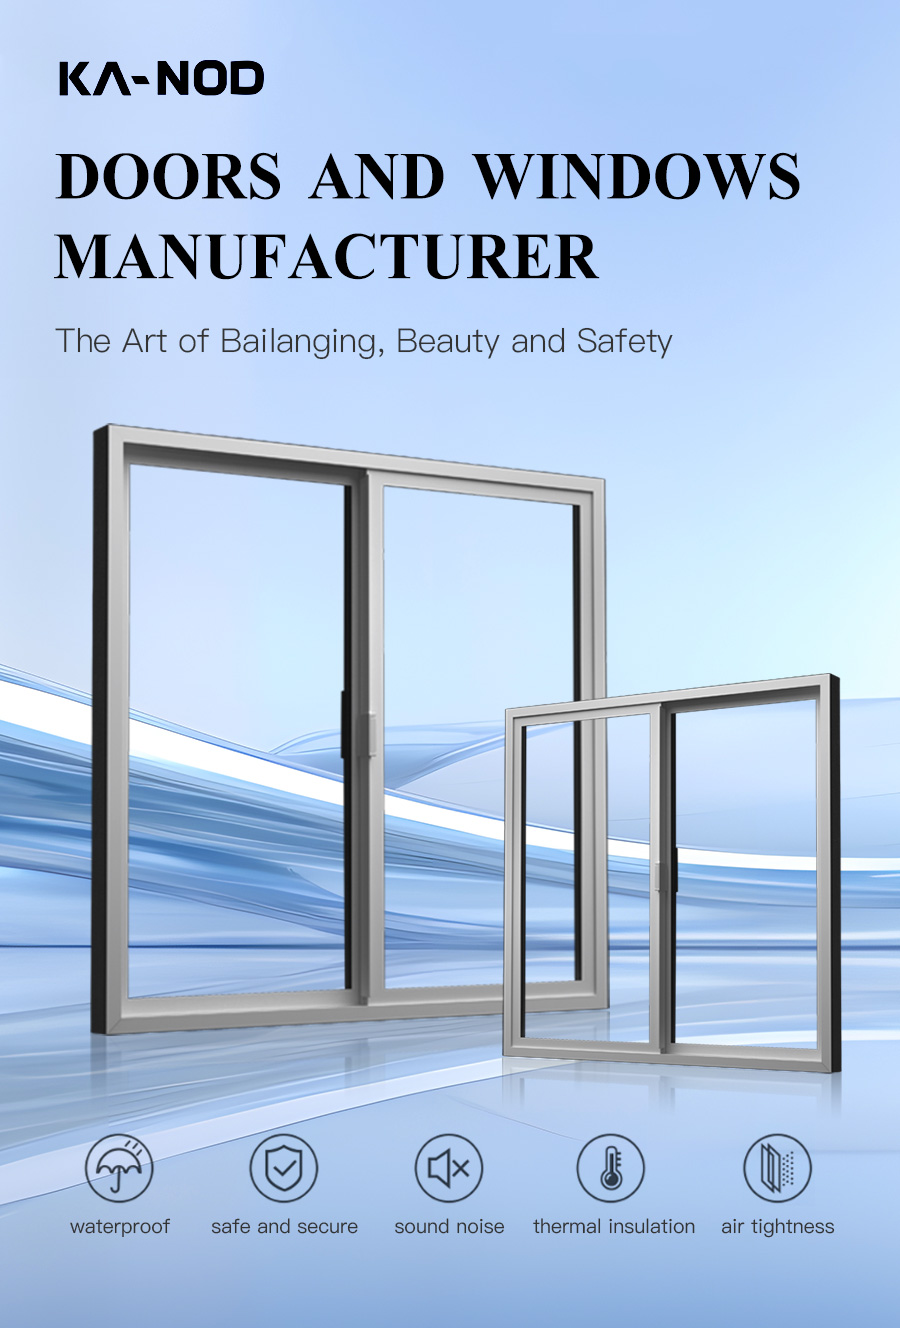 aluminium windows and doors manufacturer in China